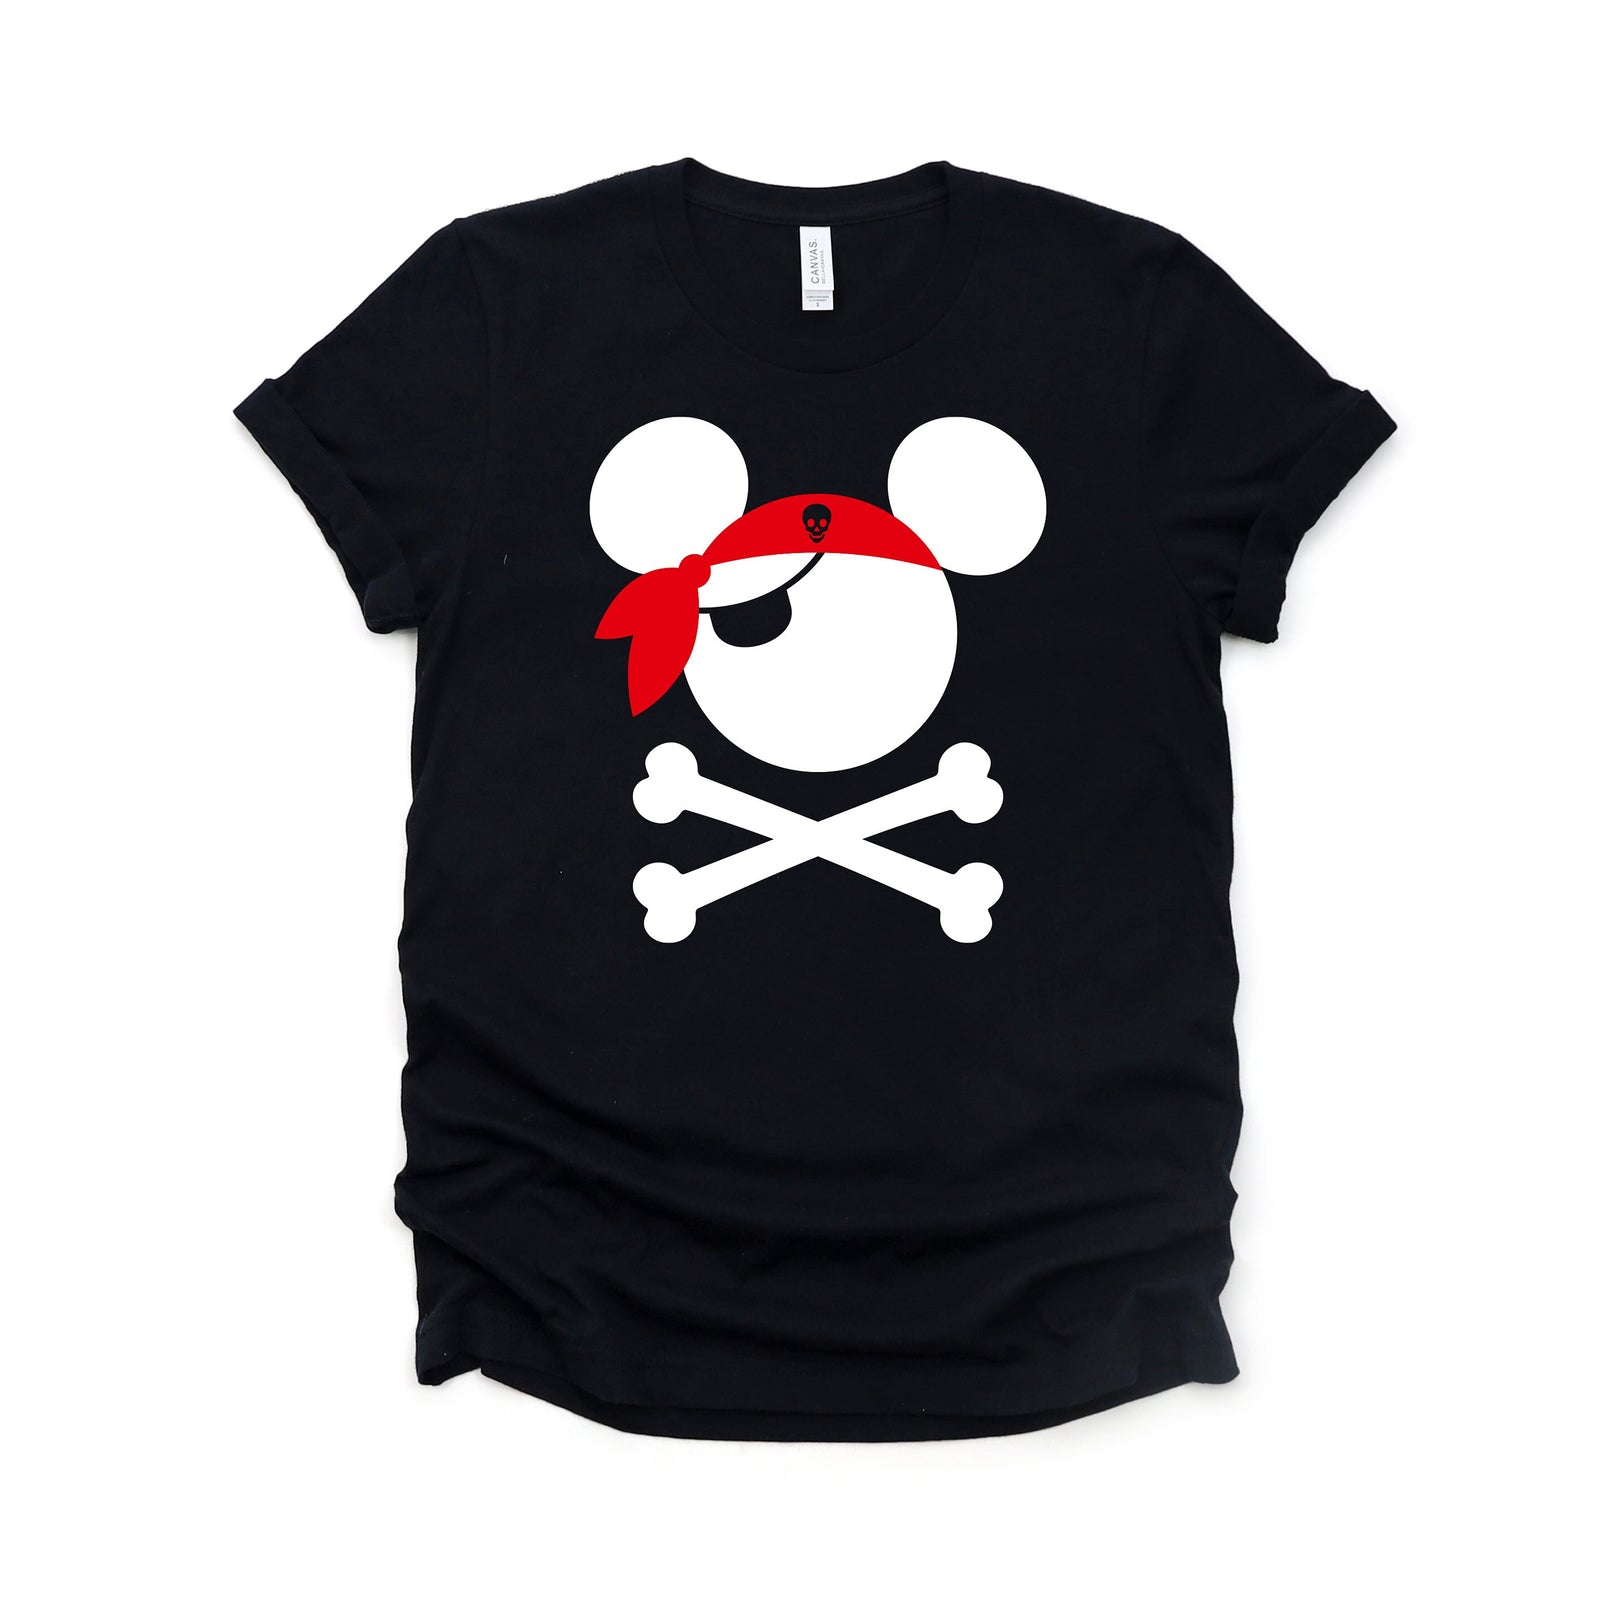 Pirate Mickey t shirt - Disney Trip Matching Shirts - Mickey Mouse T Shirt - Family Group